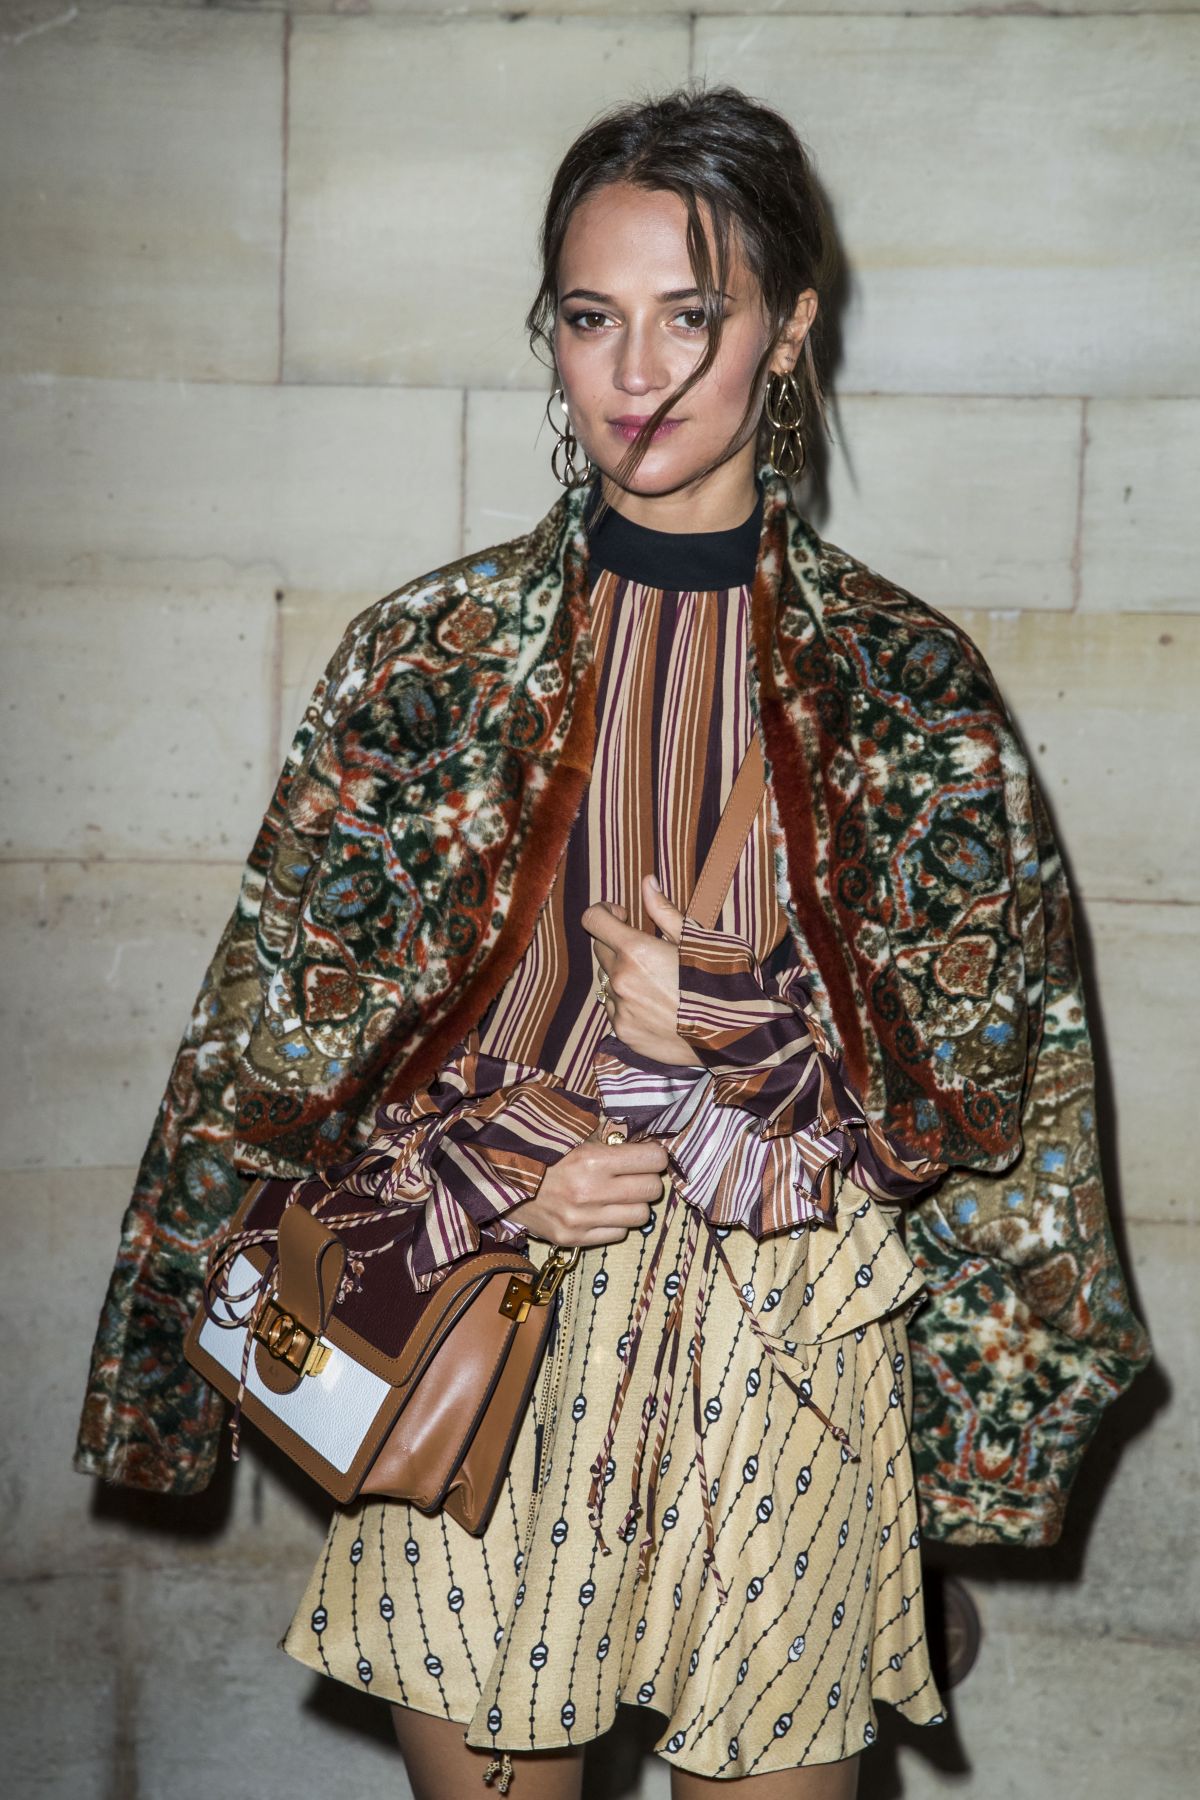 ALICIA VIKANDER at Louis Vuitton Show at Paris Fashion Week 10/02/2018 ...